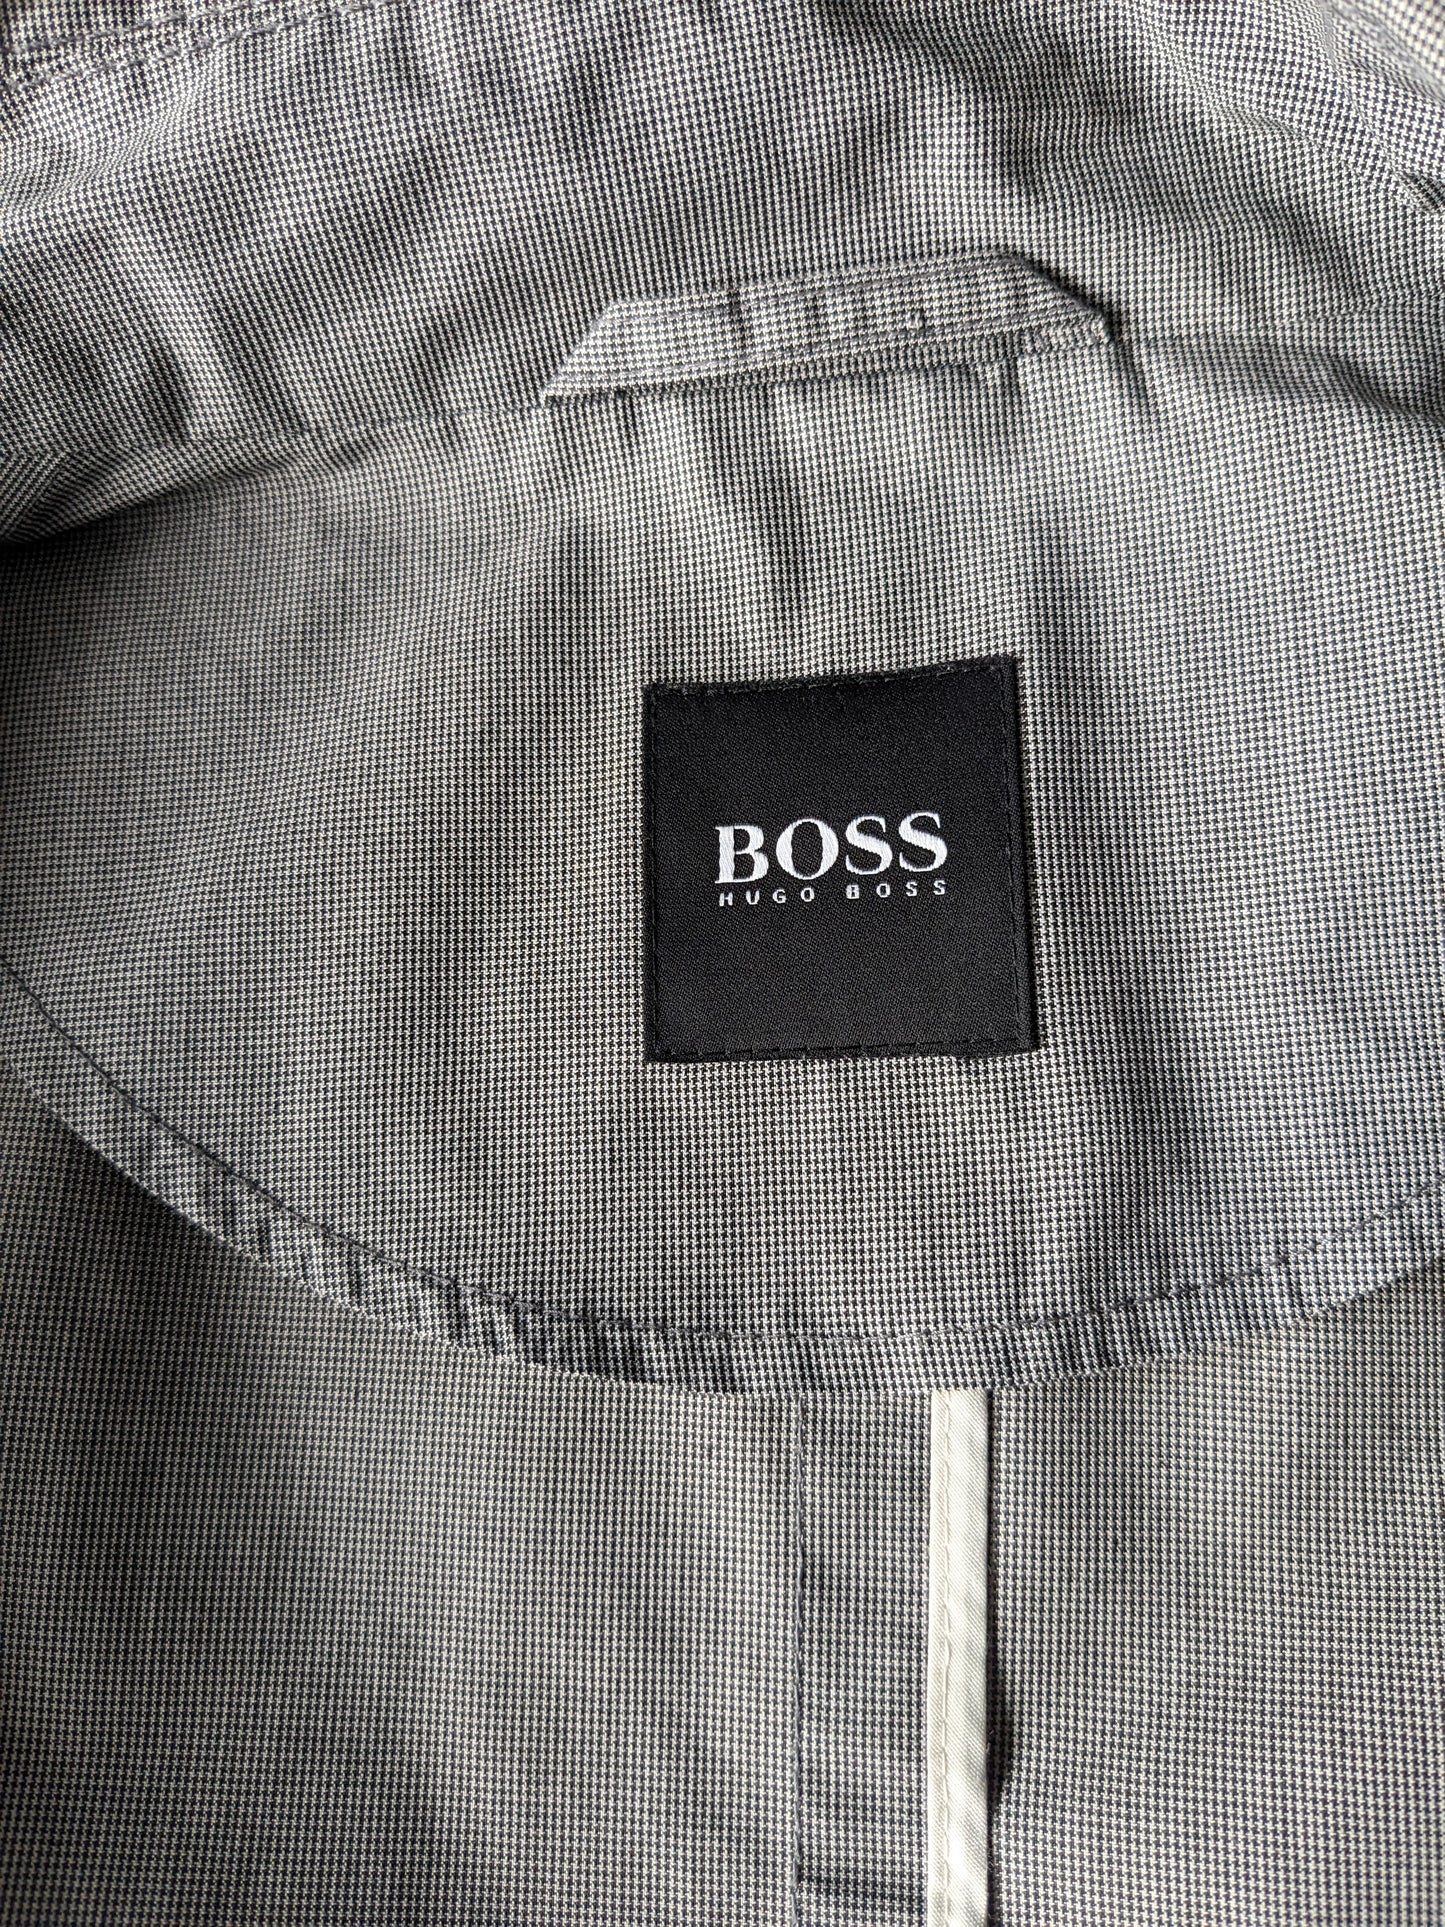 Jefe Hugo Bus entre chaqueta / longitud media. Motivo en blanco y negro. Tamaño 50 / M.